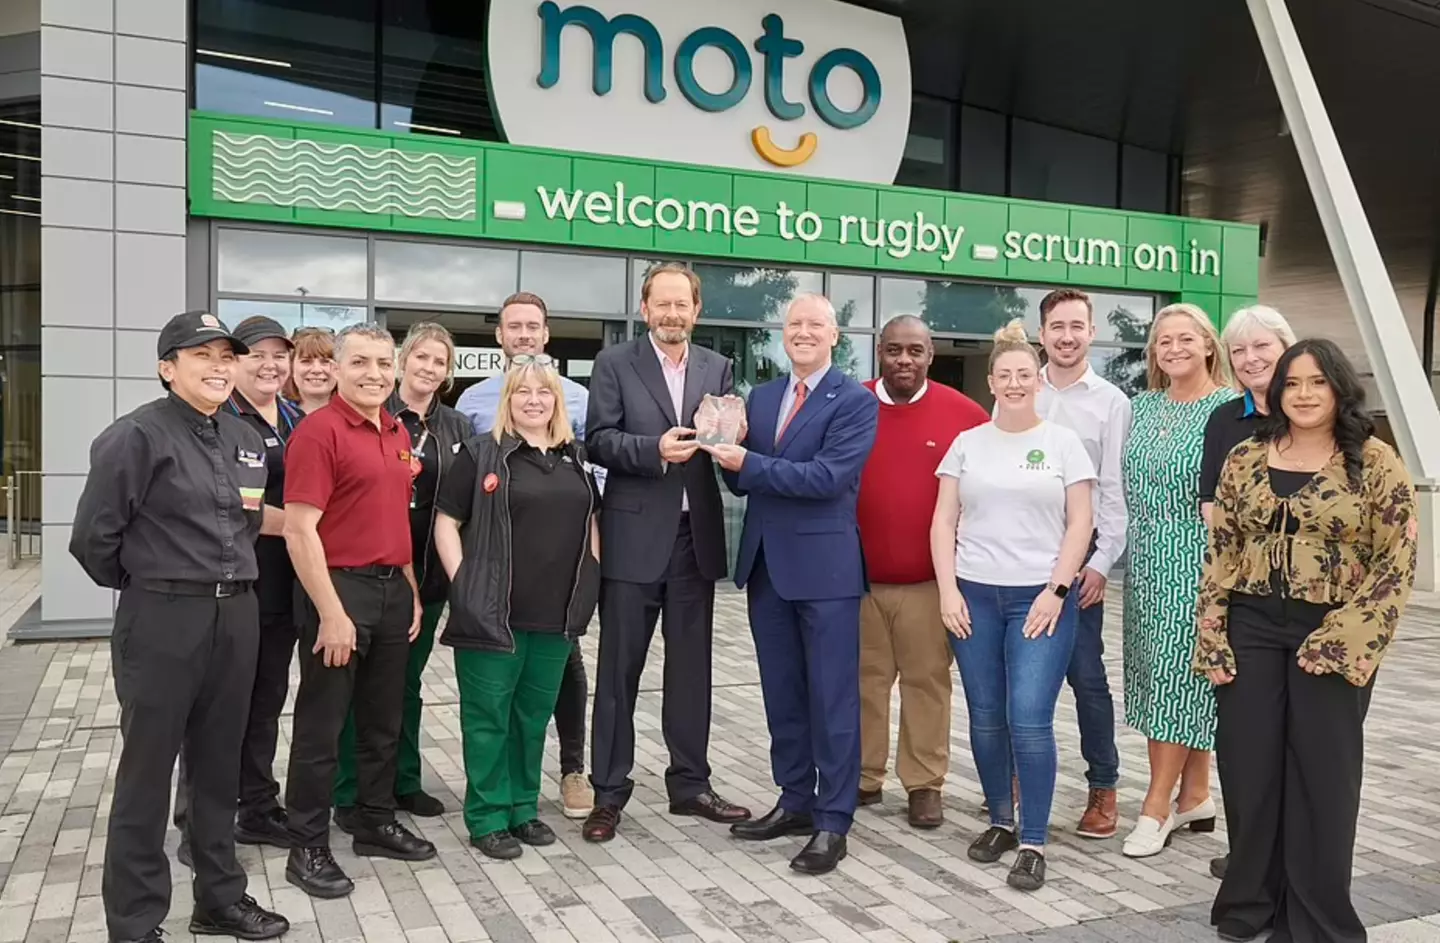 Moto’s Rugby in Warwickshire was declared the winner.